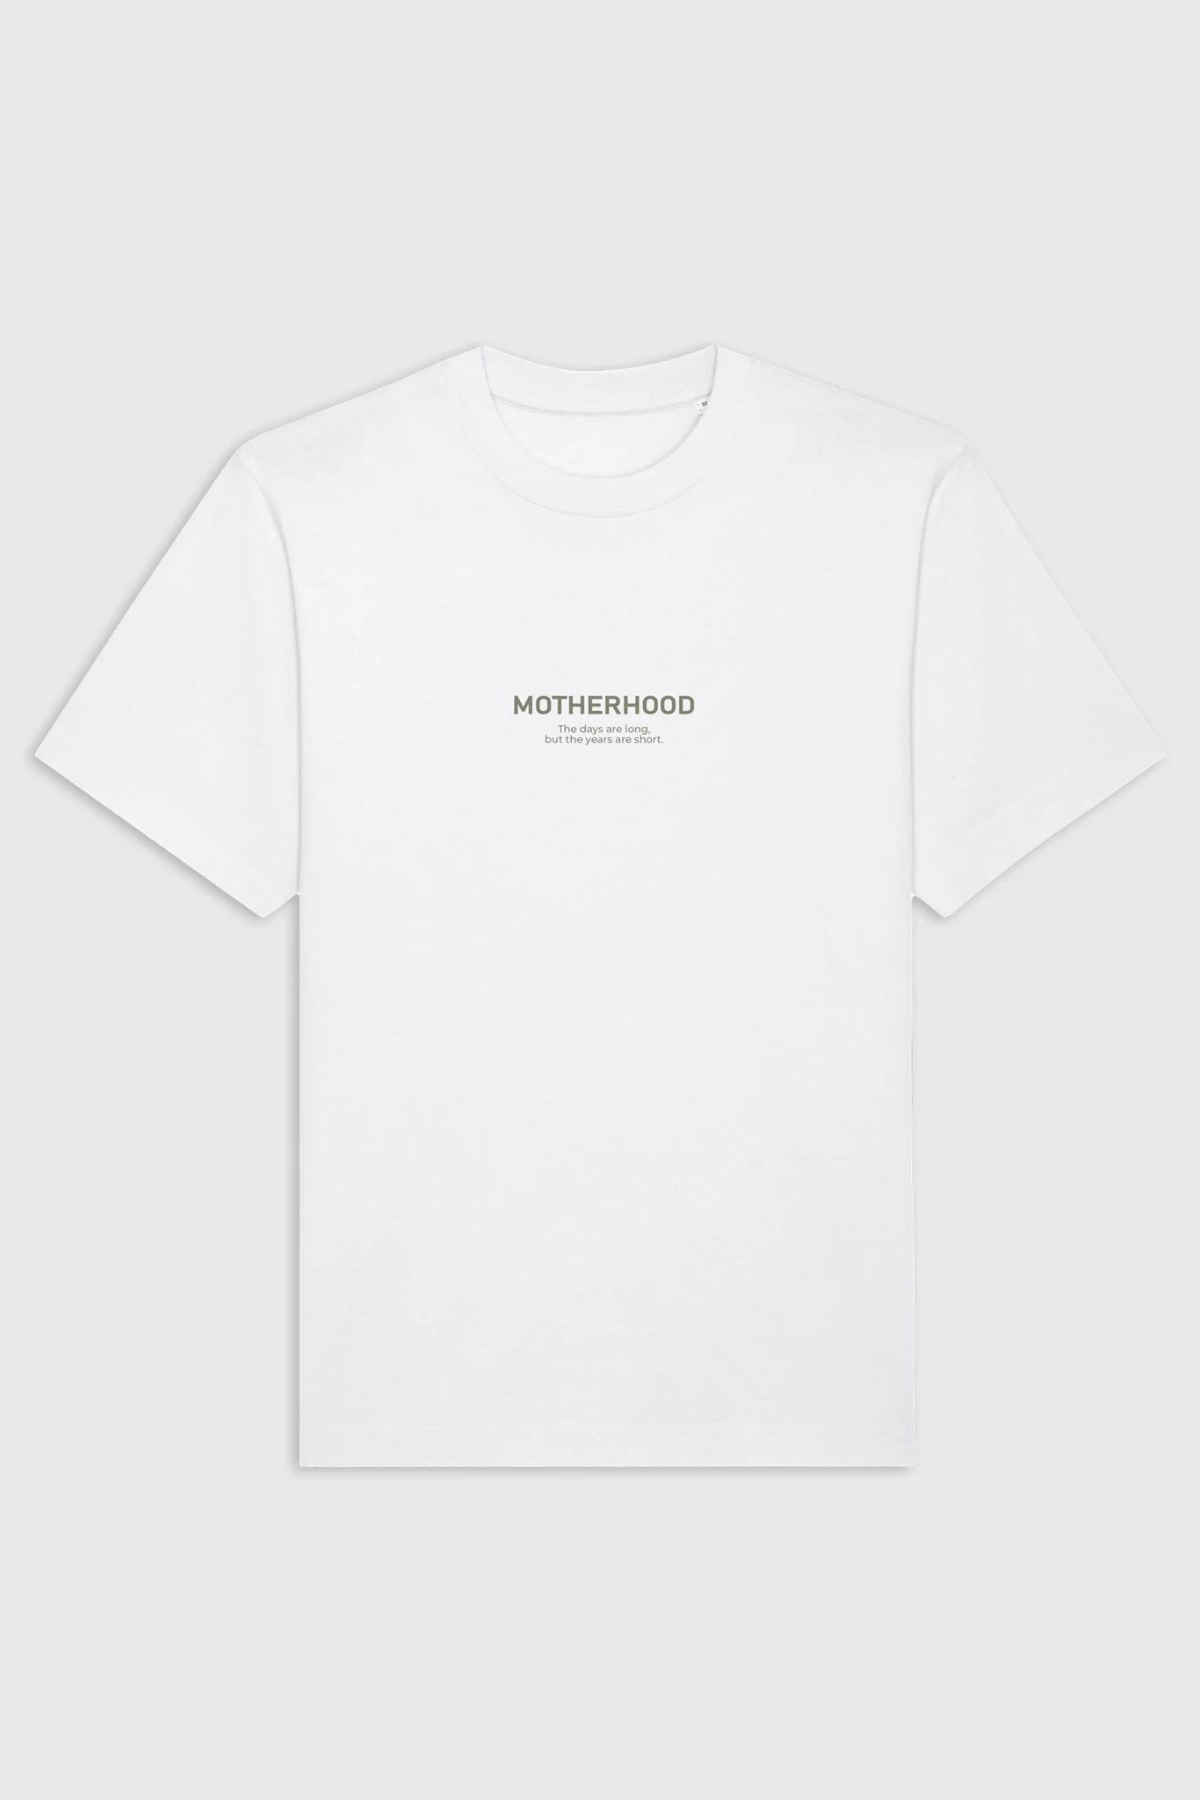 T-Shirt "Motherhood" - SYNCSON 